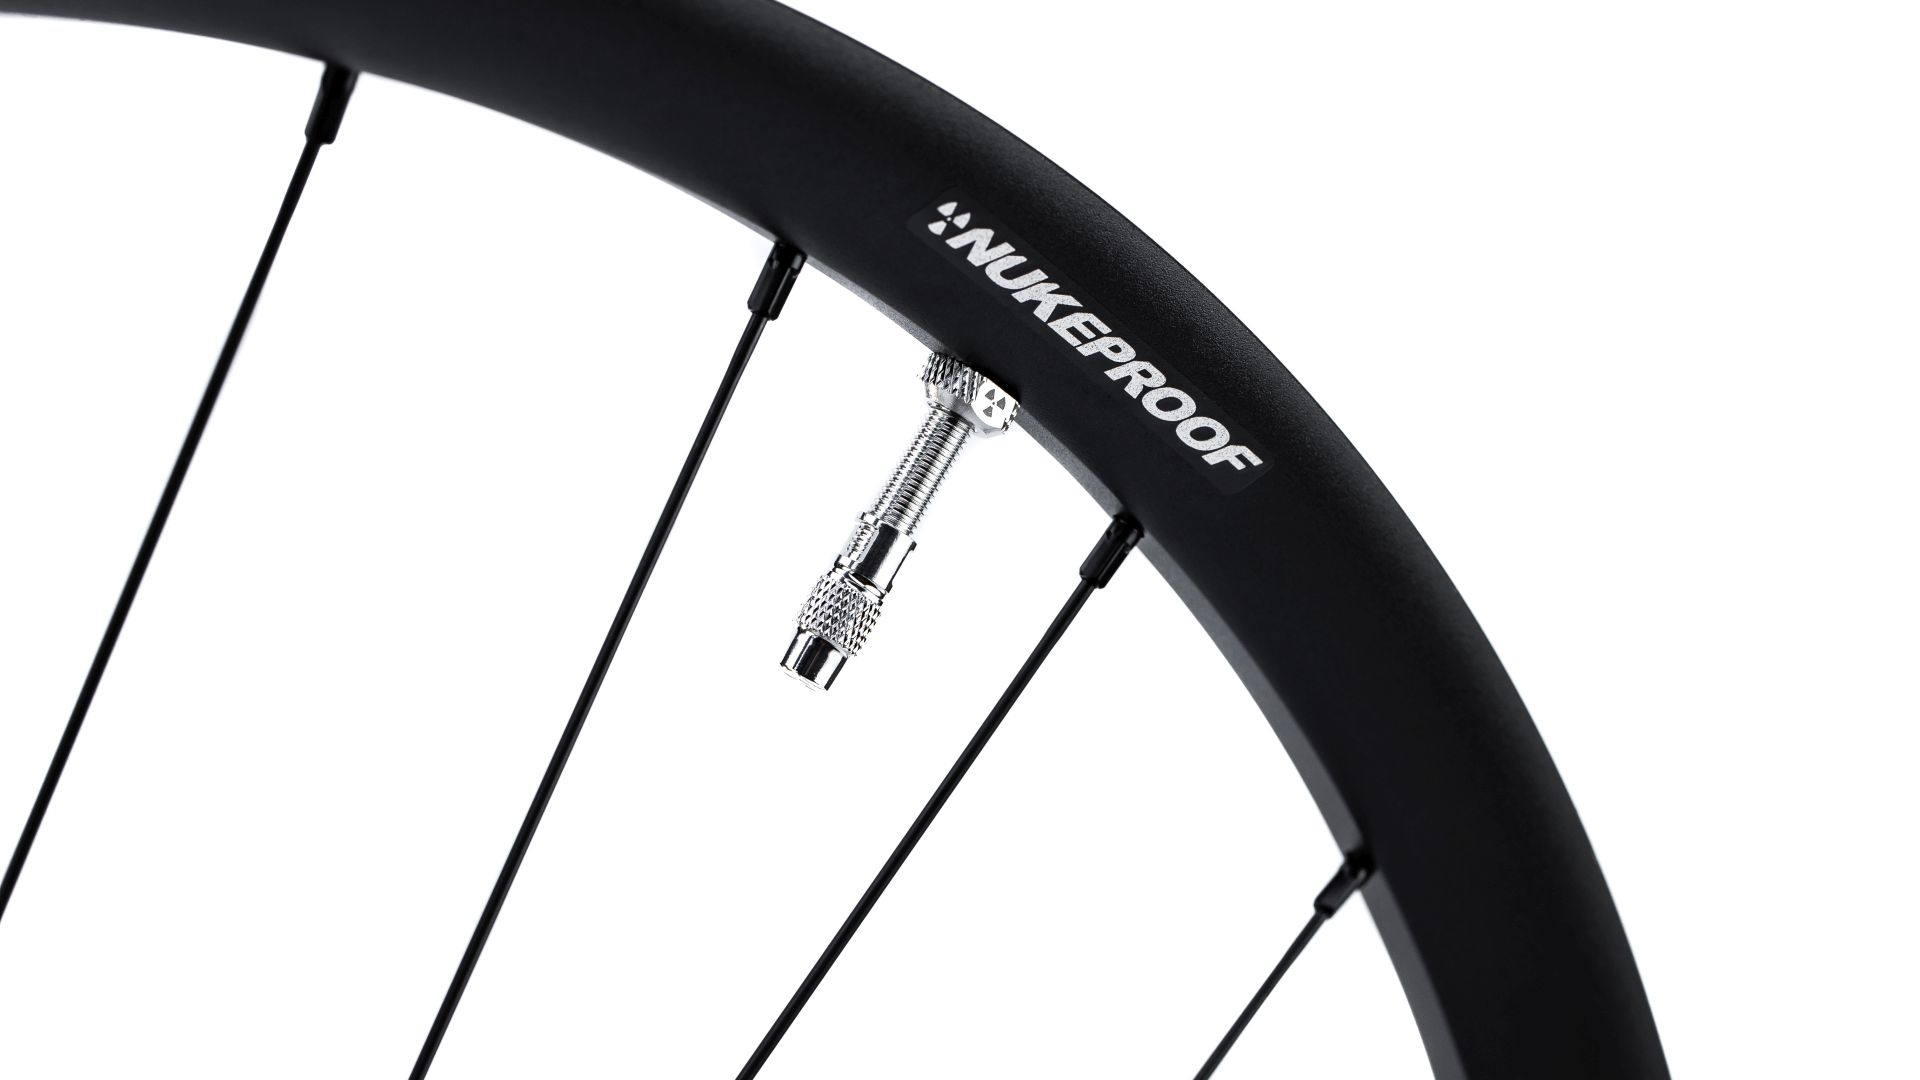 Nukeproof Launches Horizon Pro Wheels – Mountain Bike Press Release